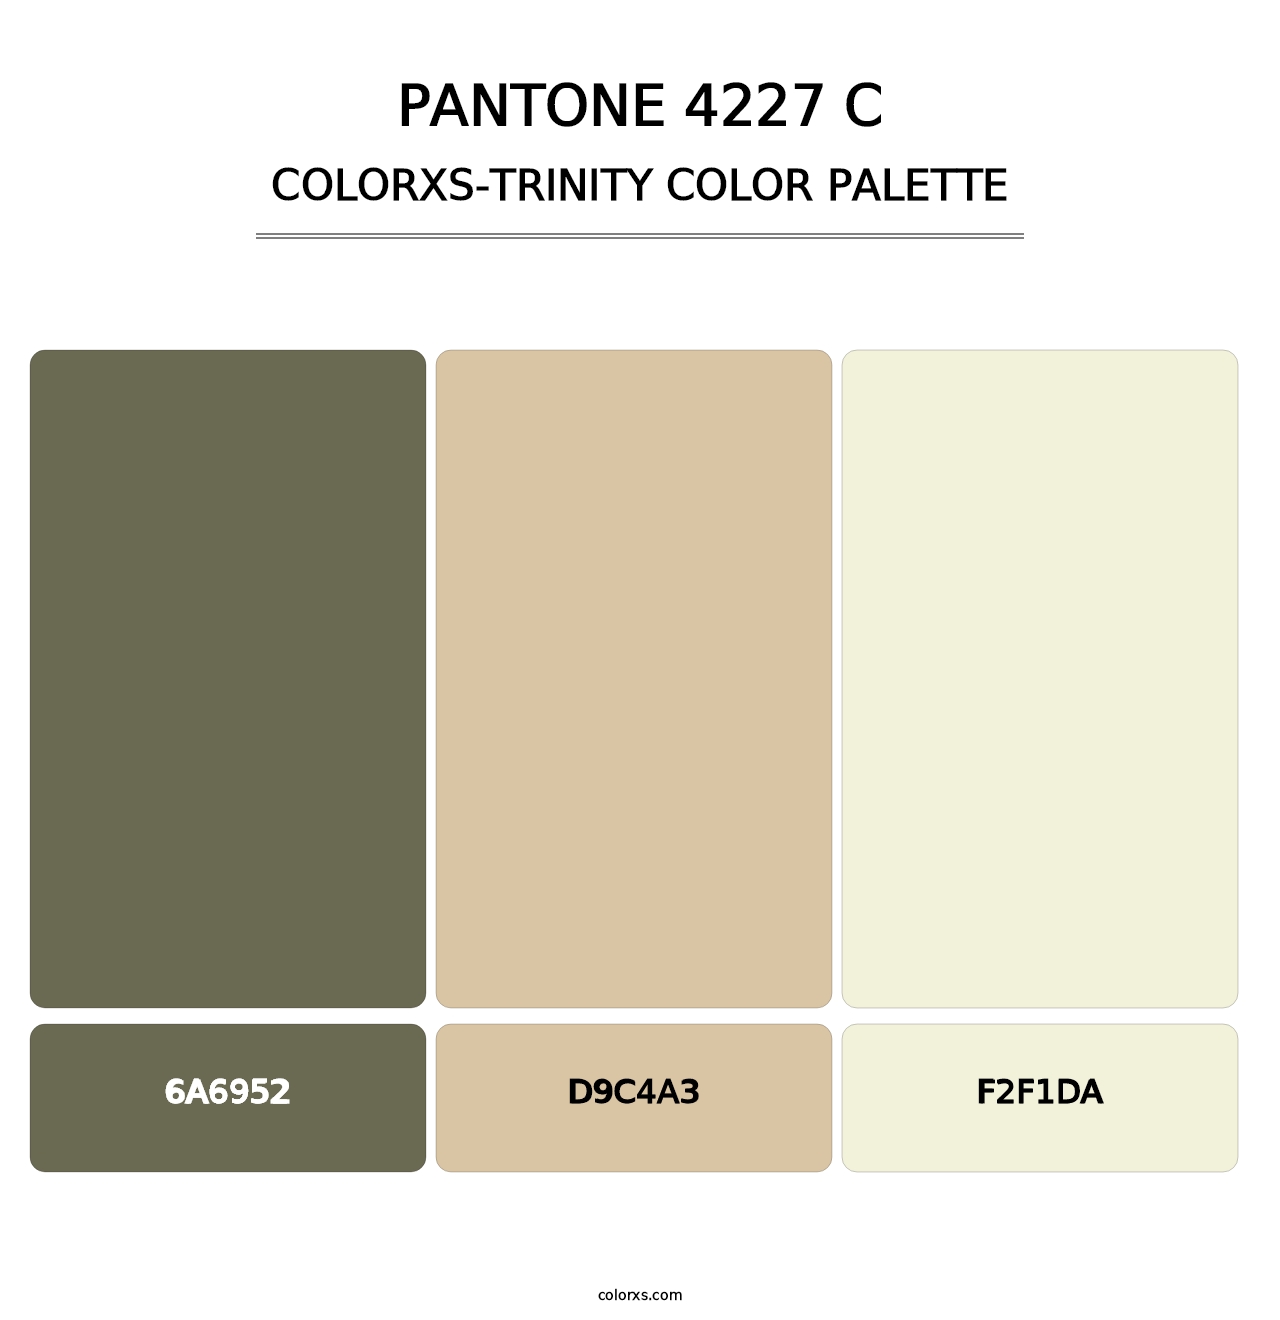 PANTONE 4227 C - Colorxs Trinity Palette